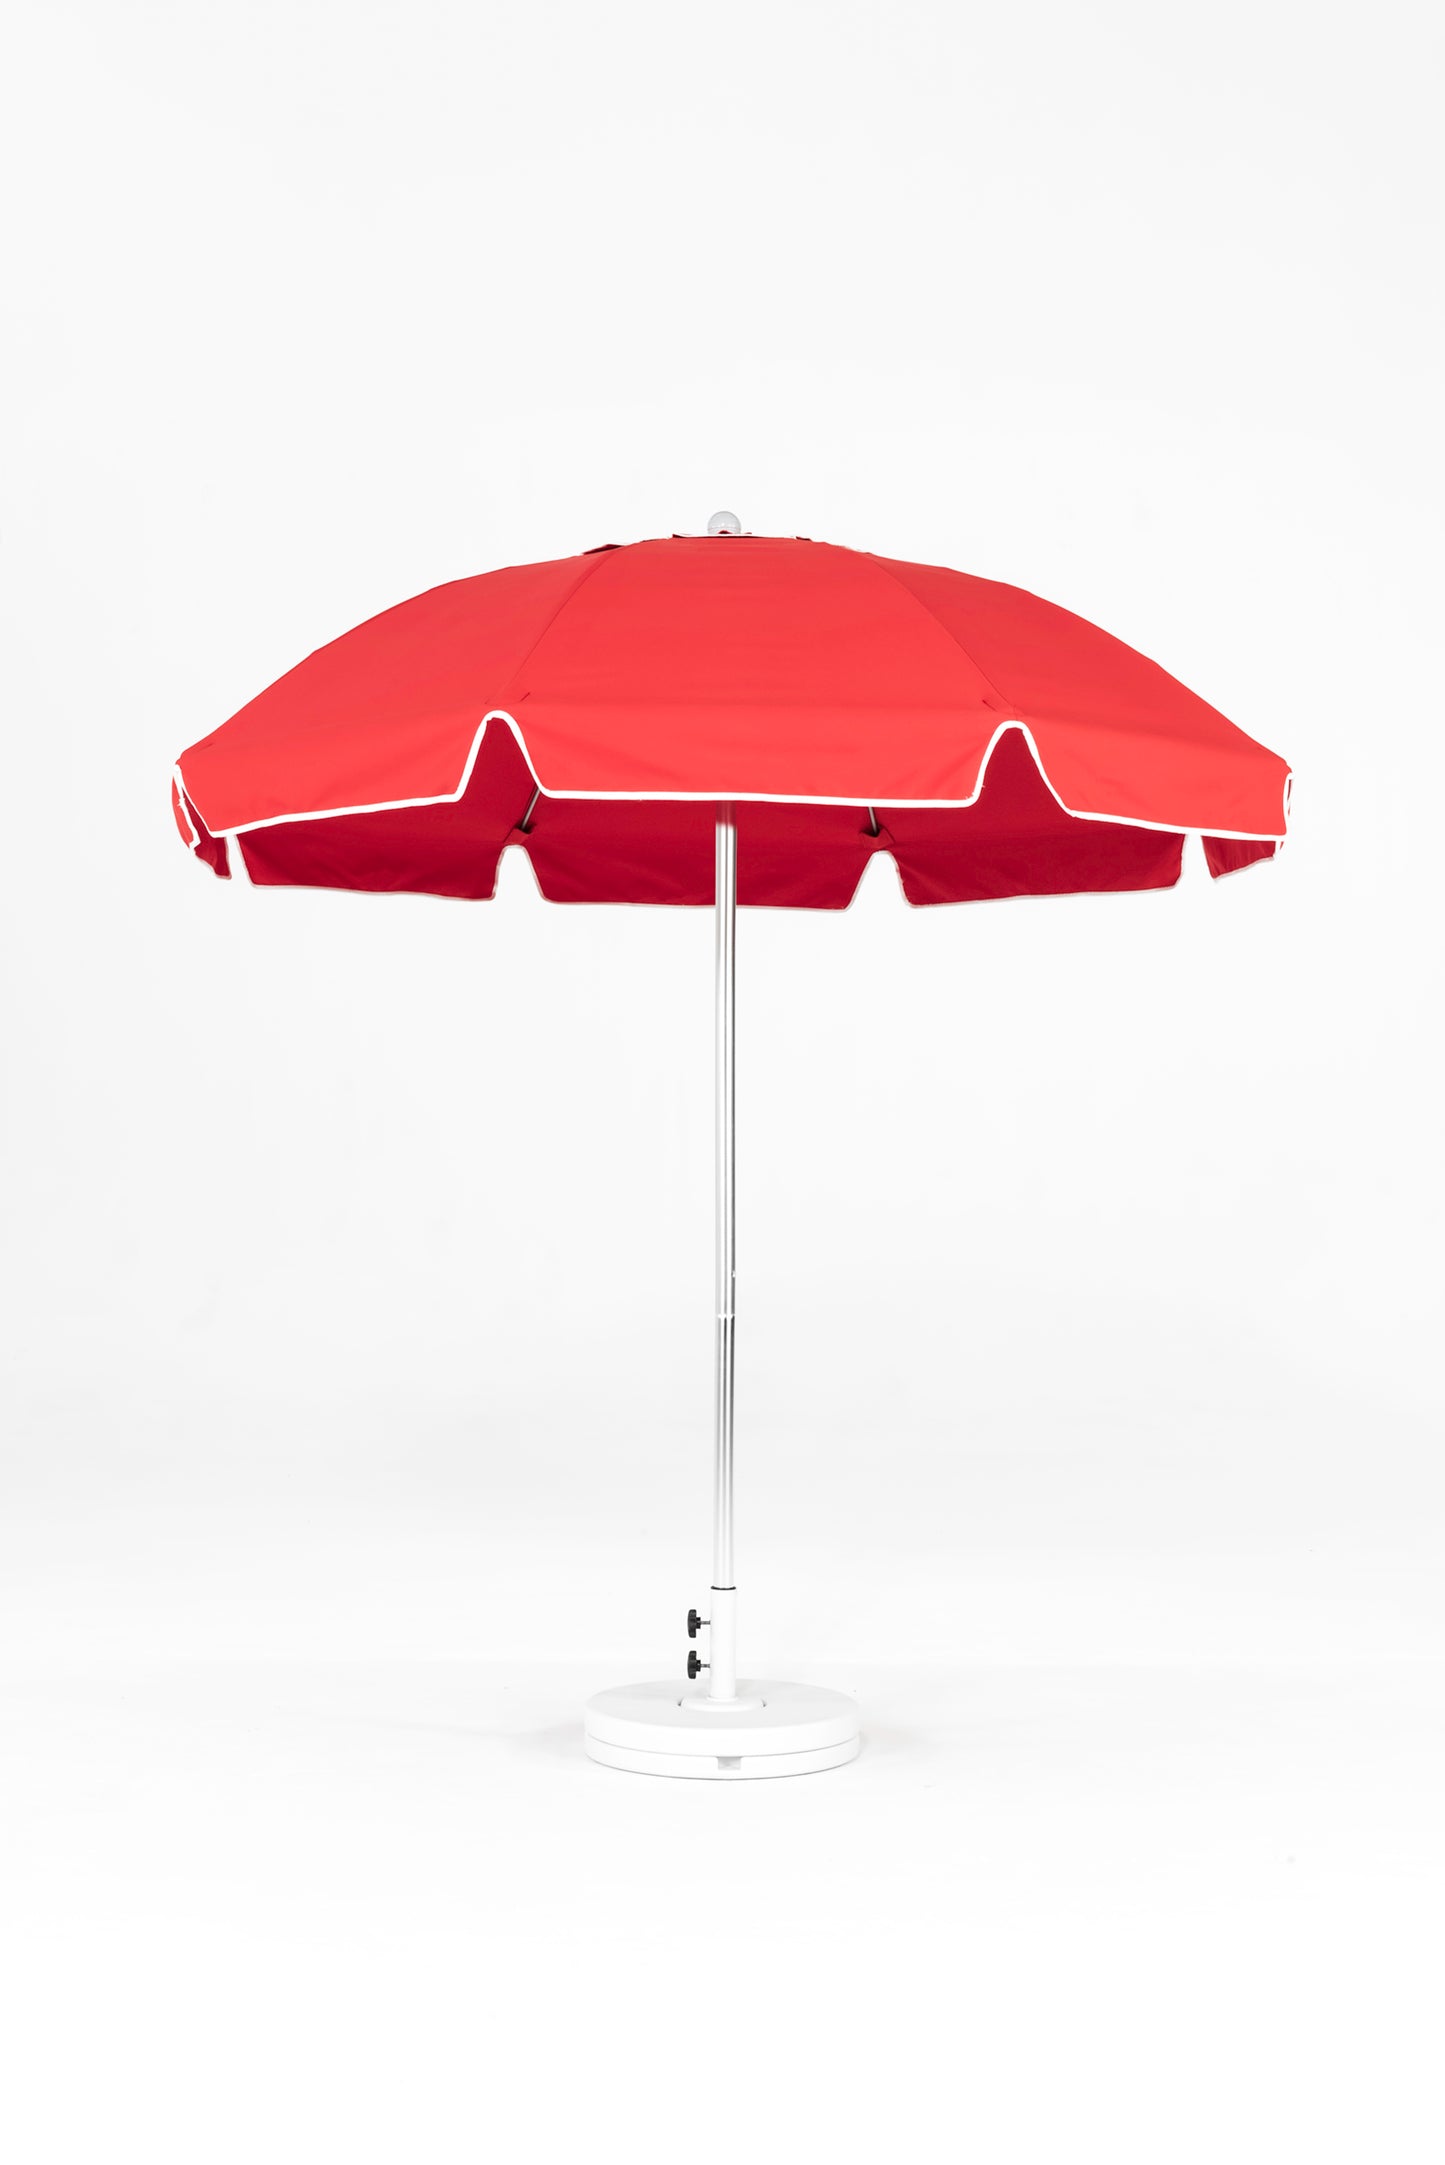 Shade Umbrellas in Stock-Frankford Monterey Matte Silver Logo Red 9' Auto Tilt Umbrella